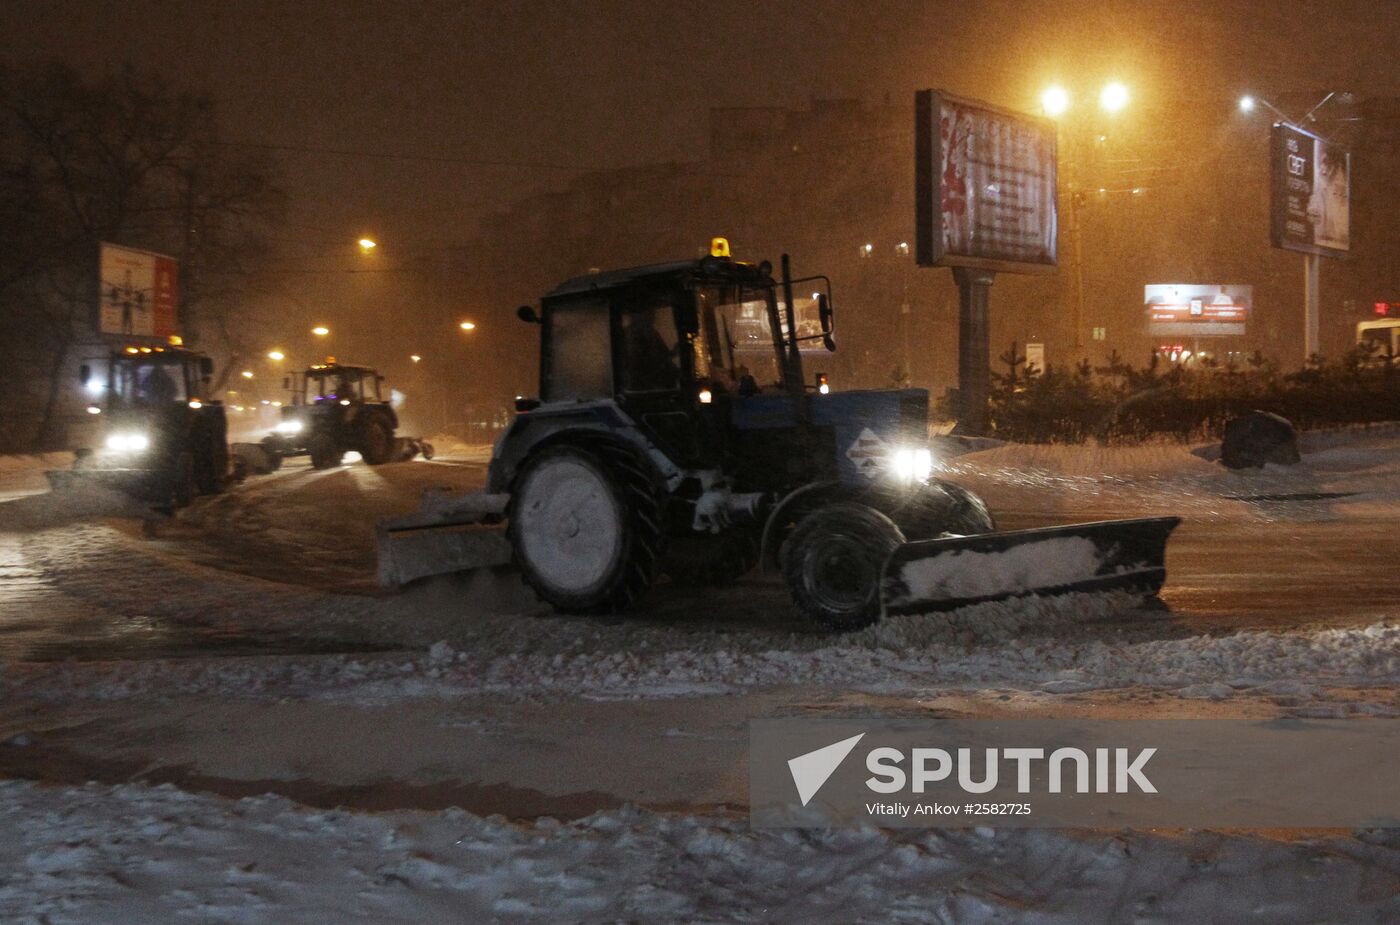 Snowfall and storm wind in Vladivostok